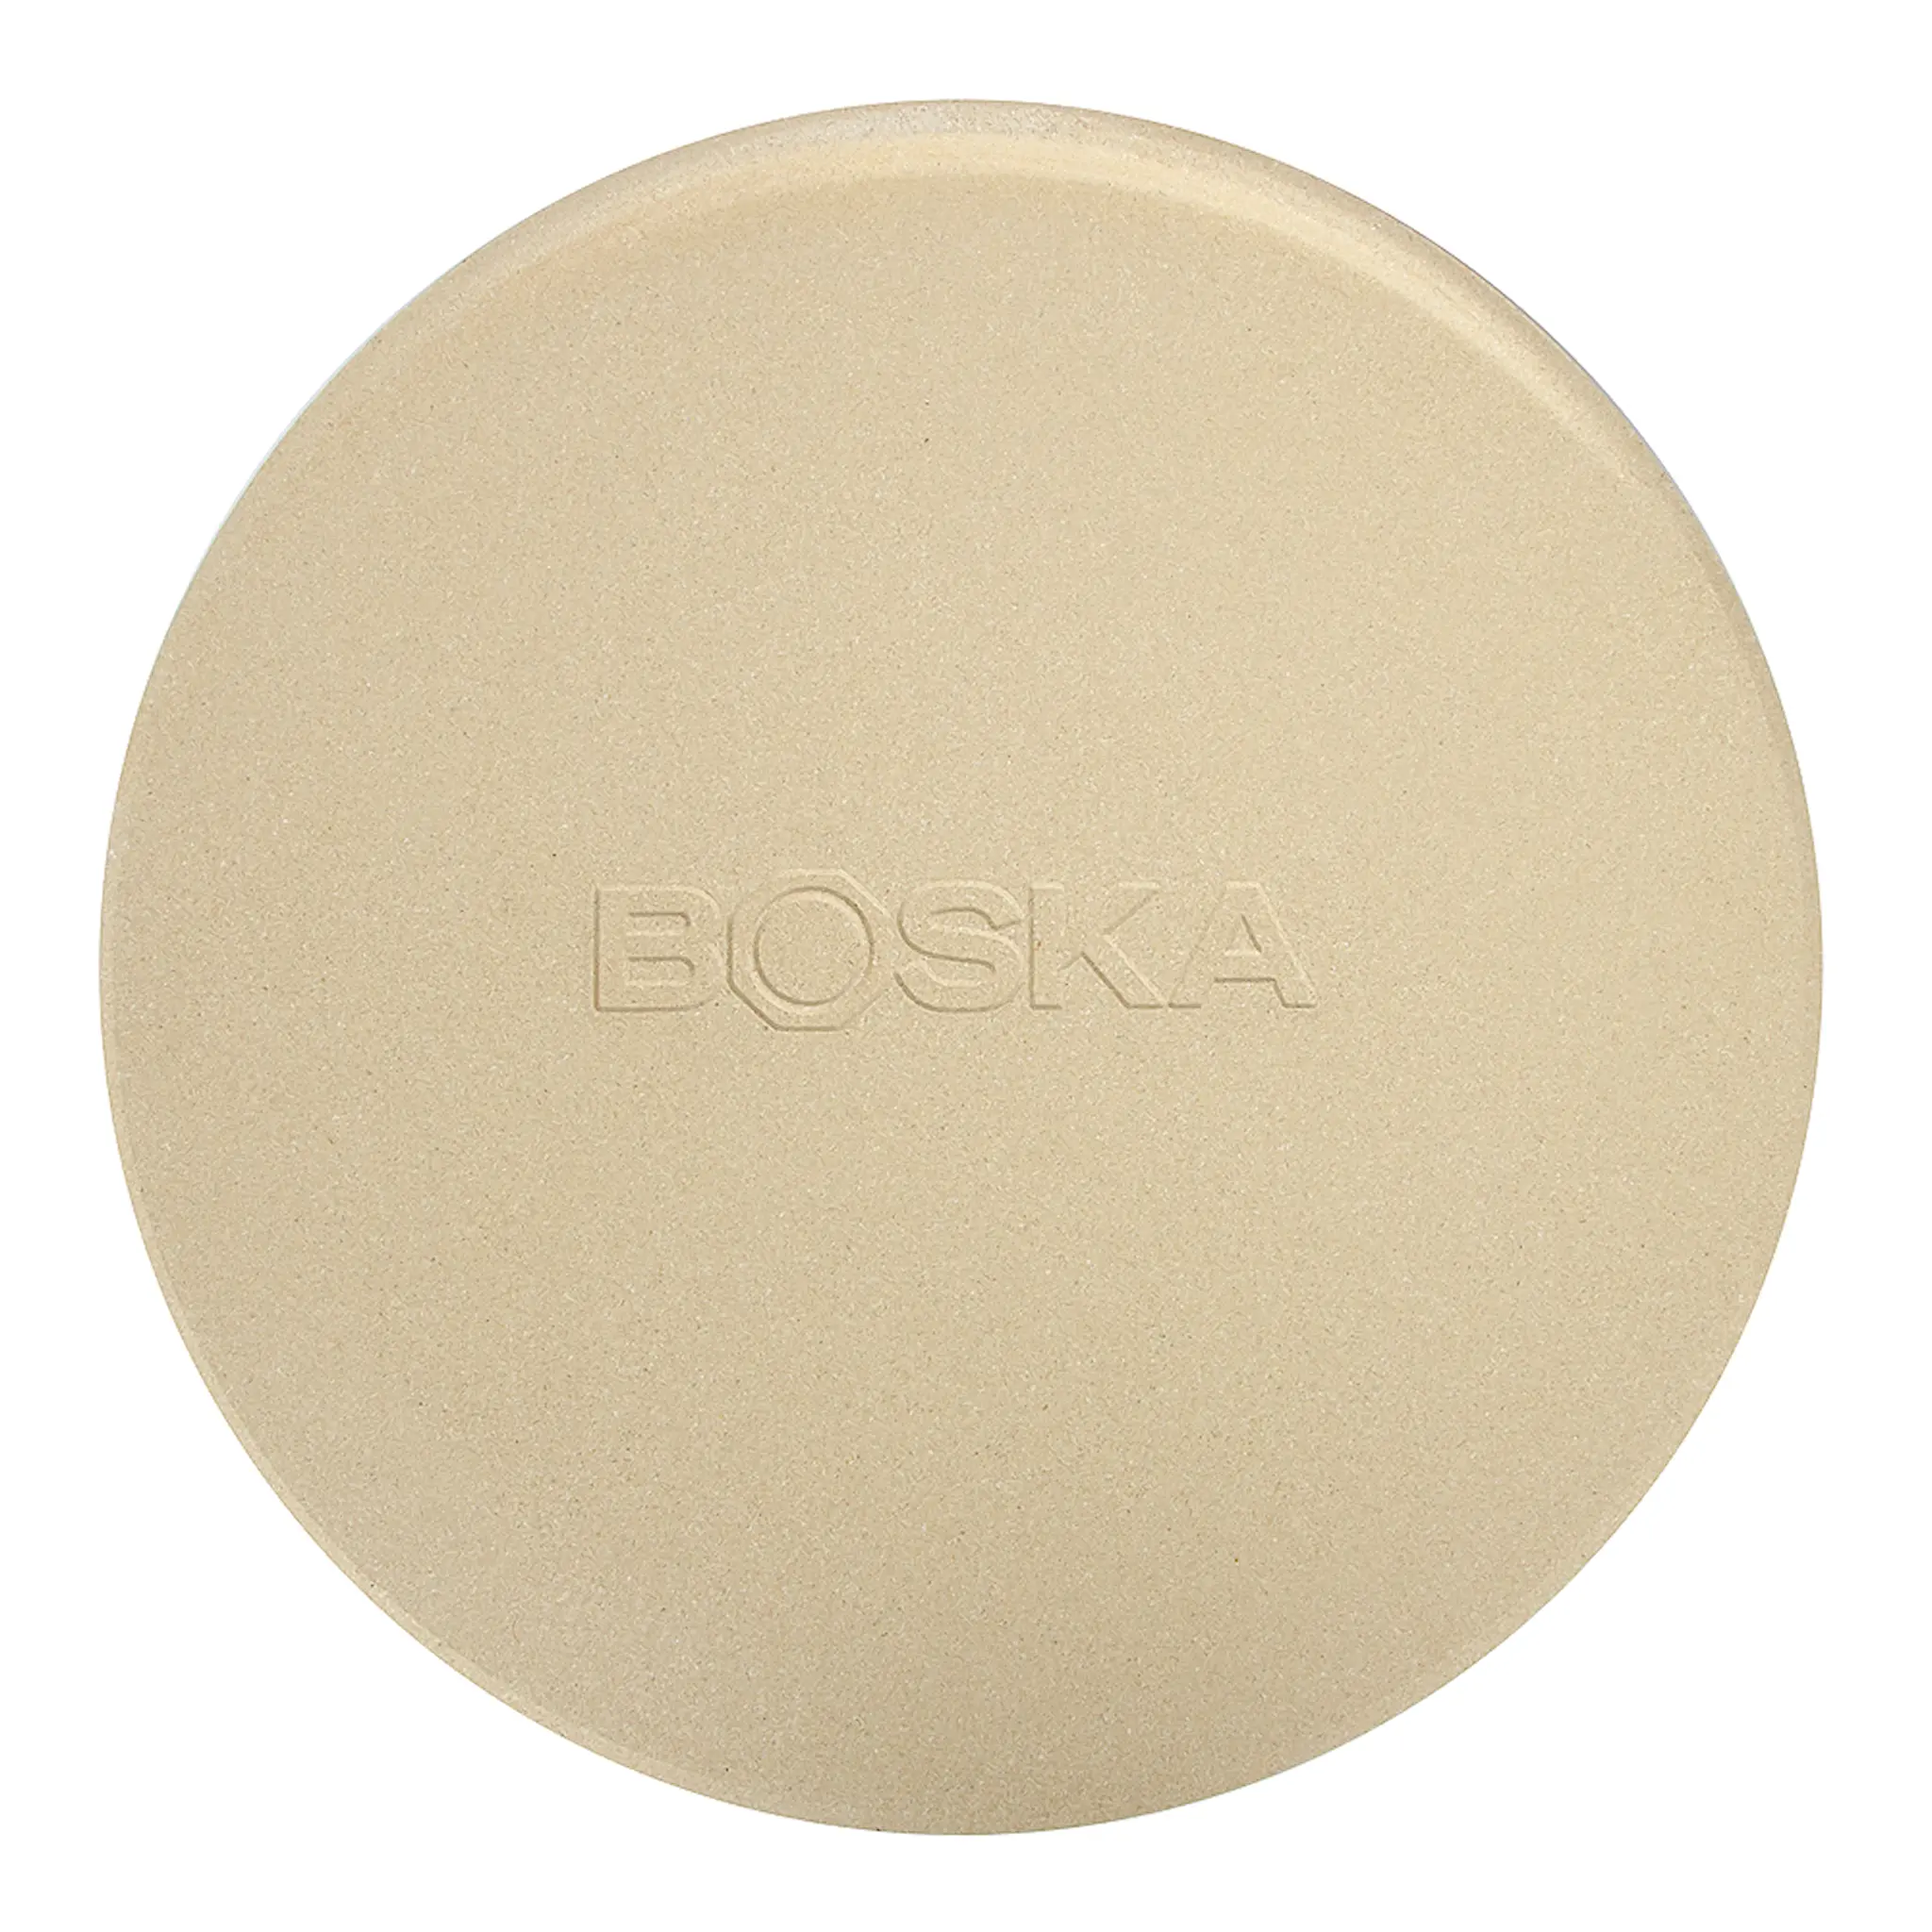 Boska Pizzawares exclusive pizzastein deluxe rund